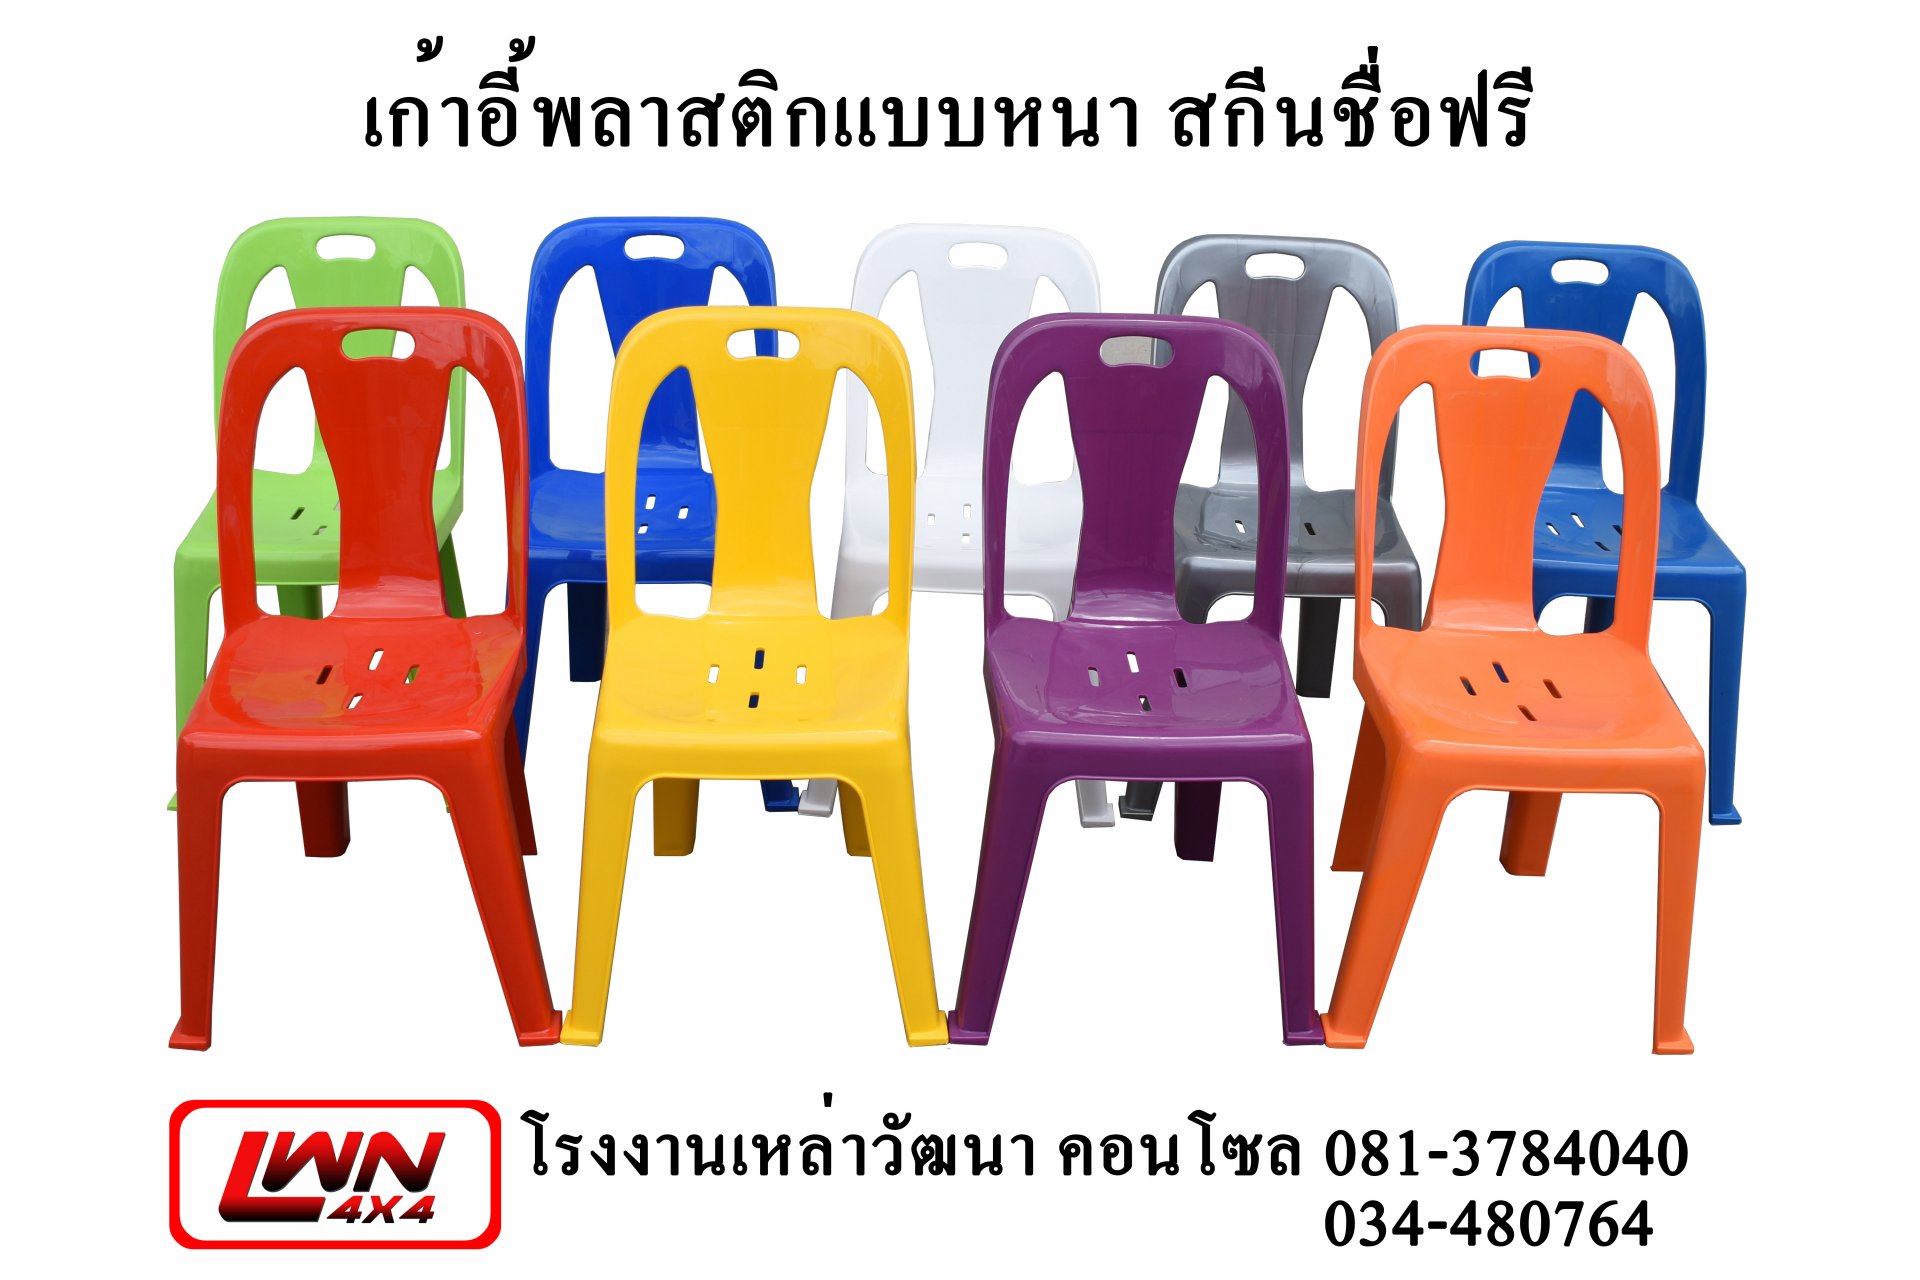 PT-02 Plastic Chair